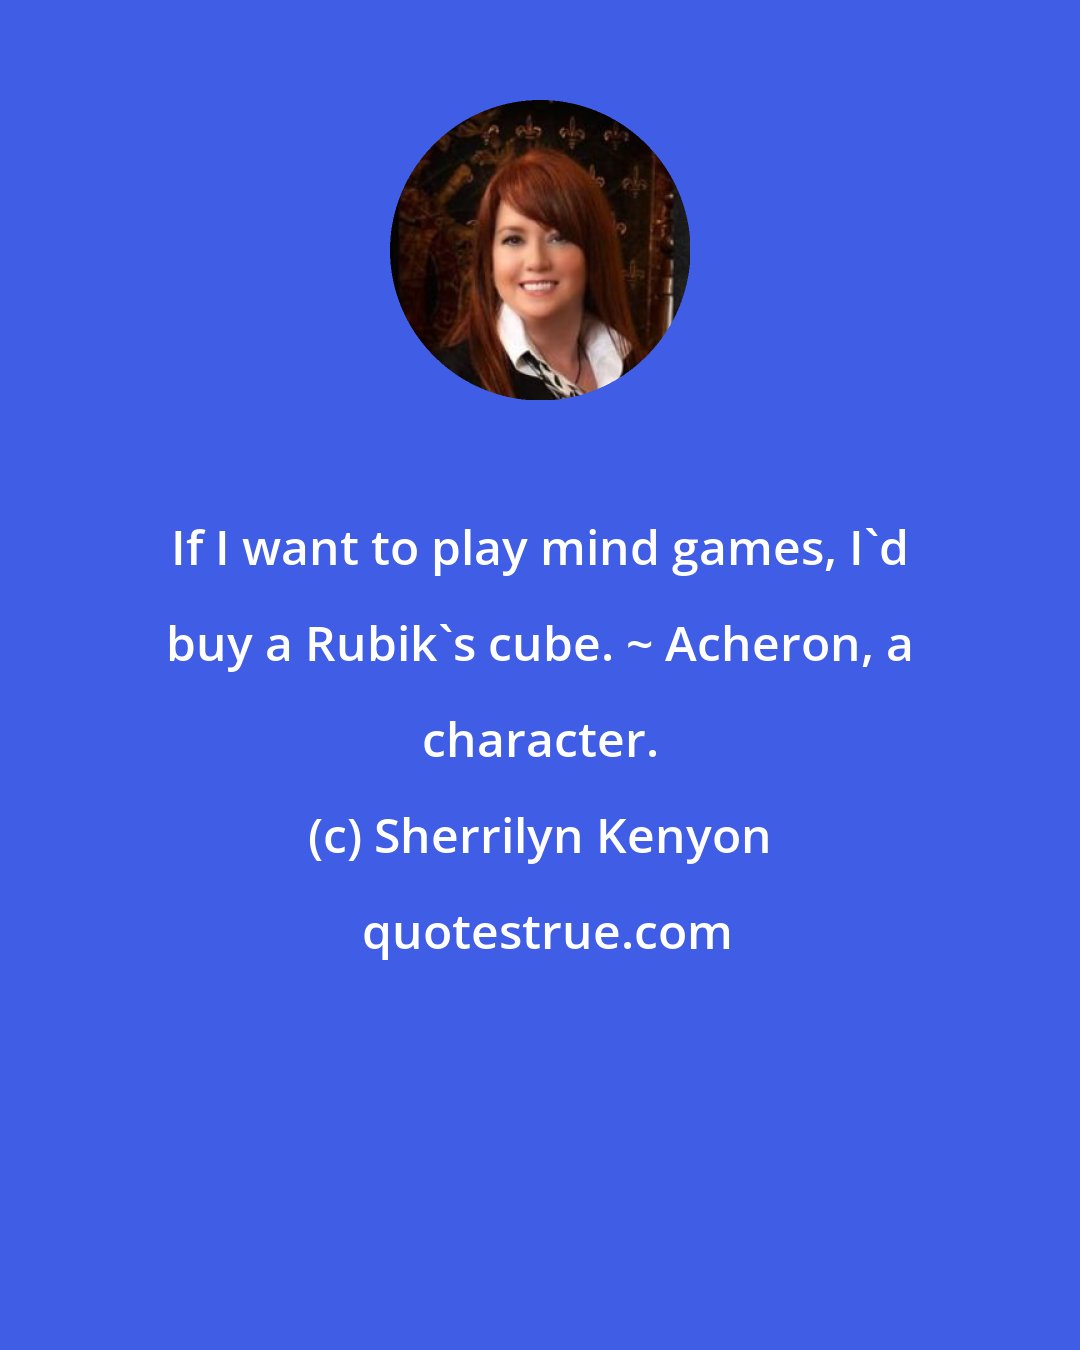 Sherrilyn Kenyon: If I want to play mind games, I'd buy a Rubik's cube. ~ Acheron, a character.